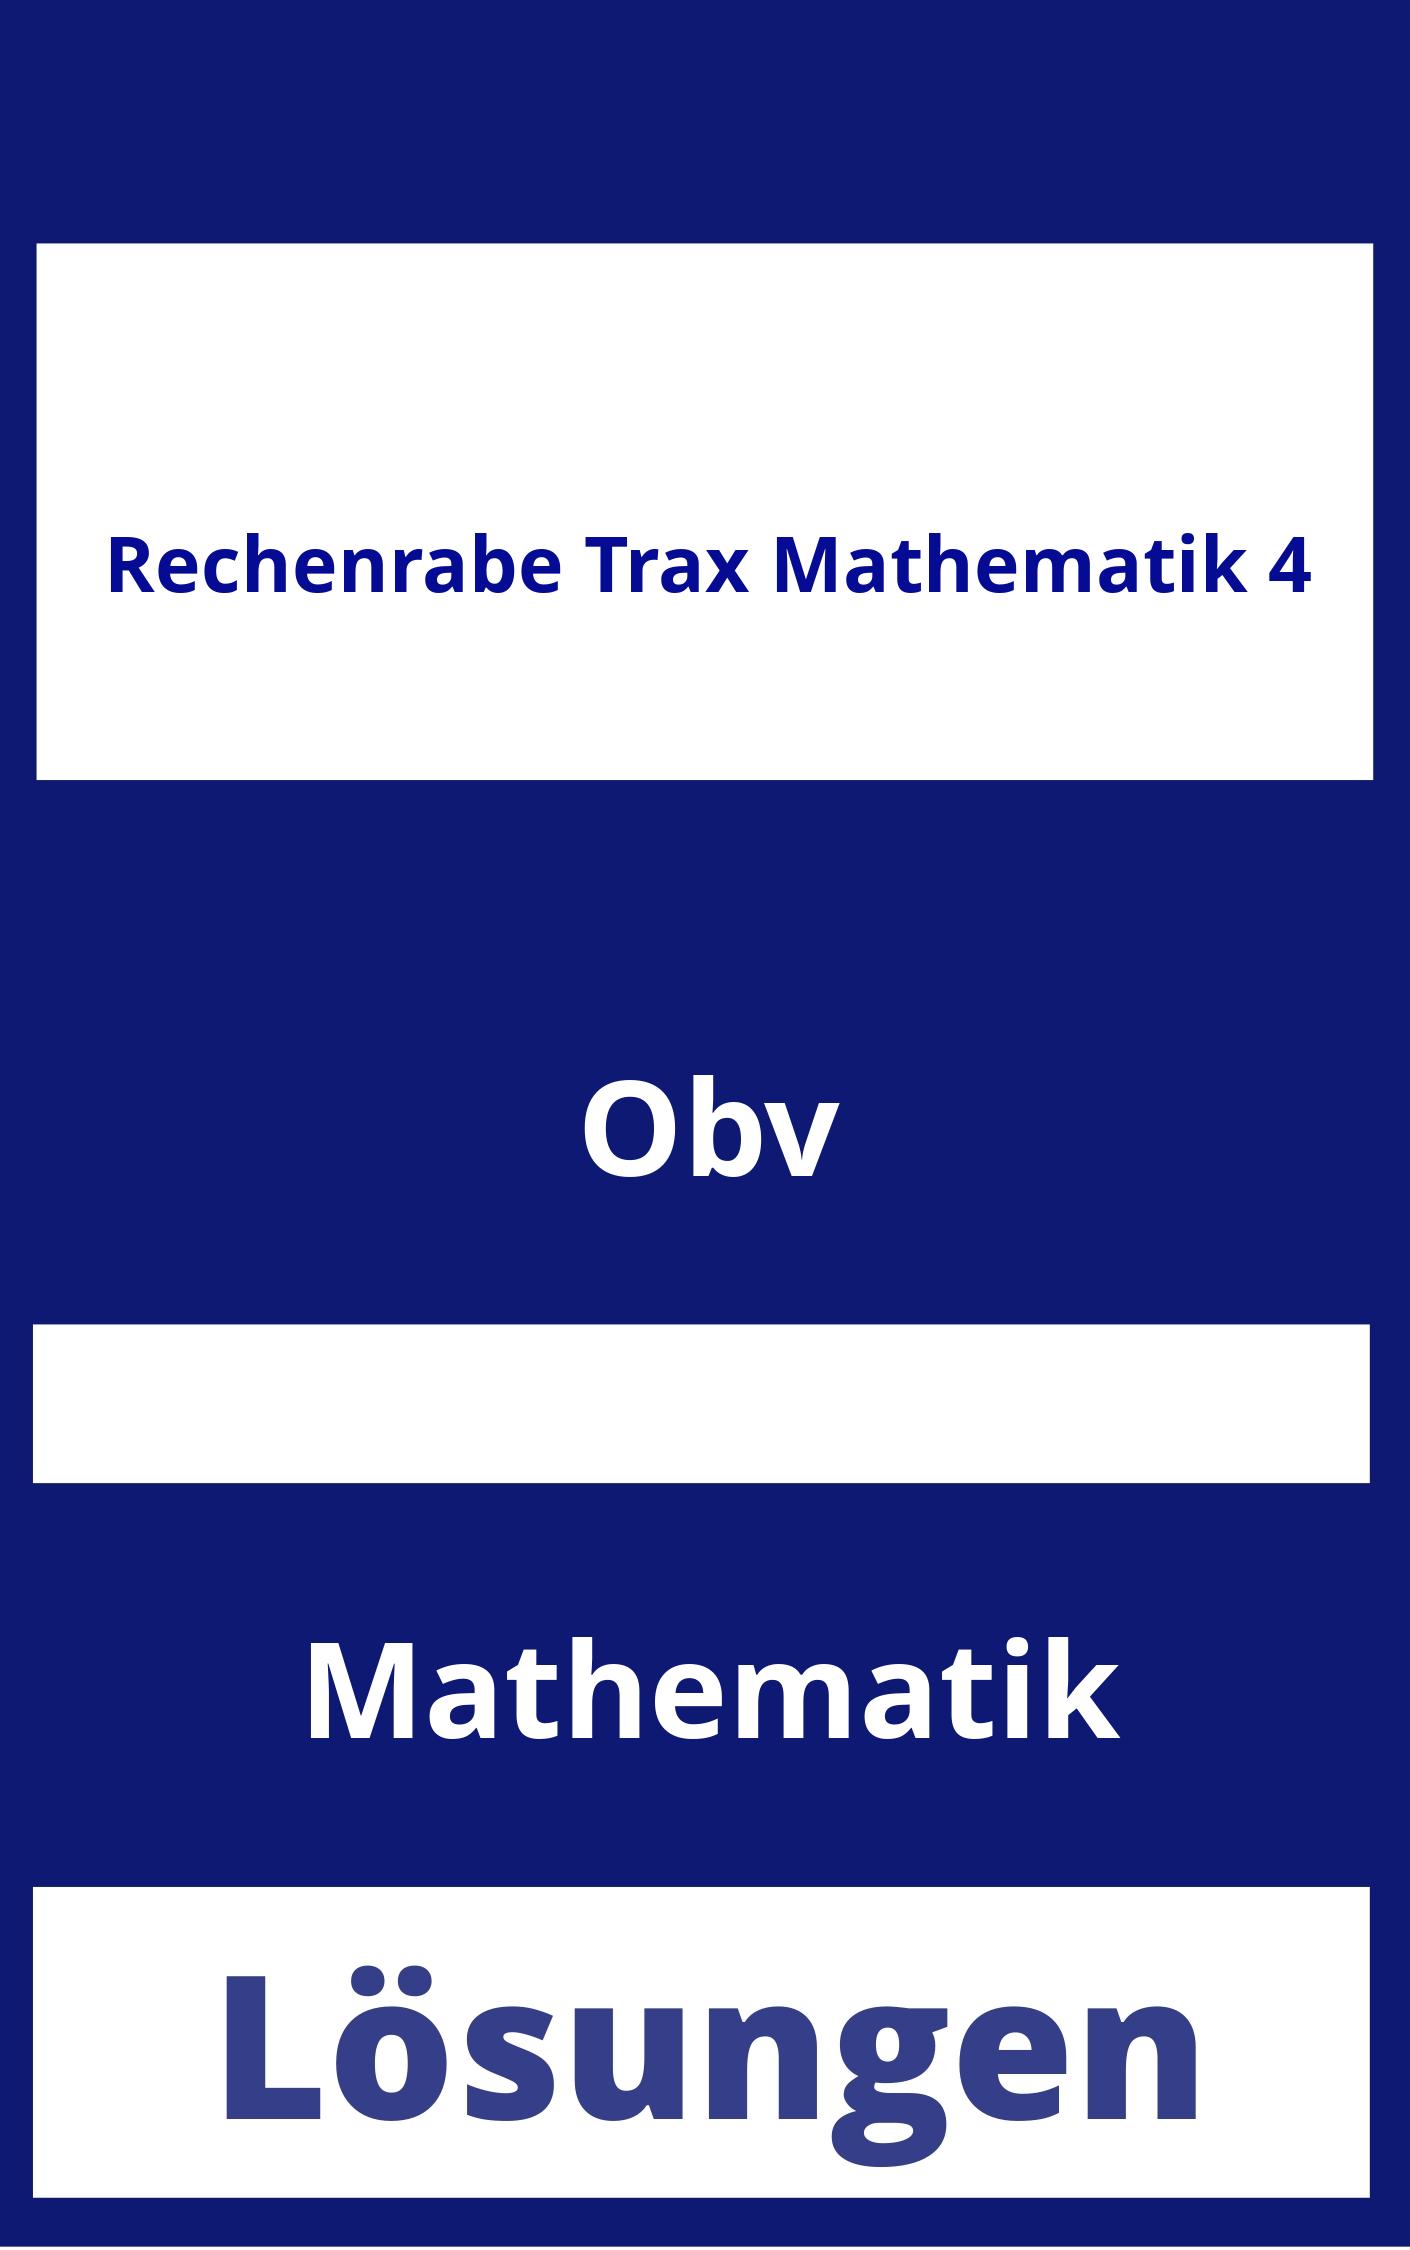 Rechenrabe Trax Mathematik 4